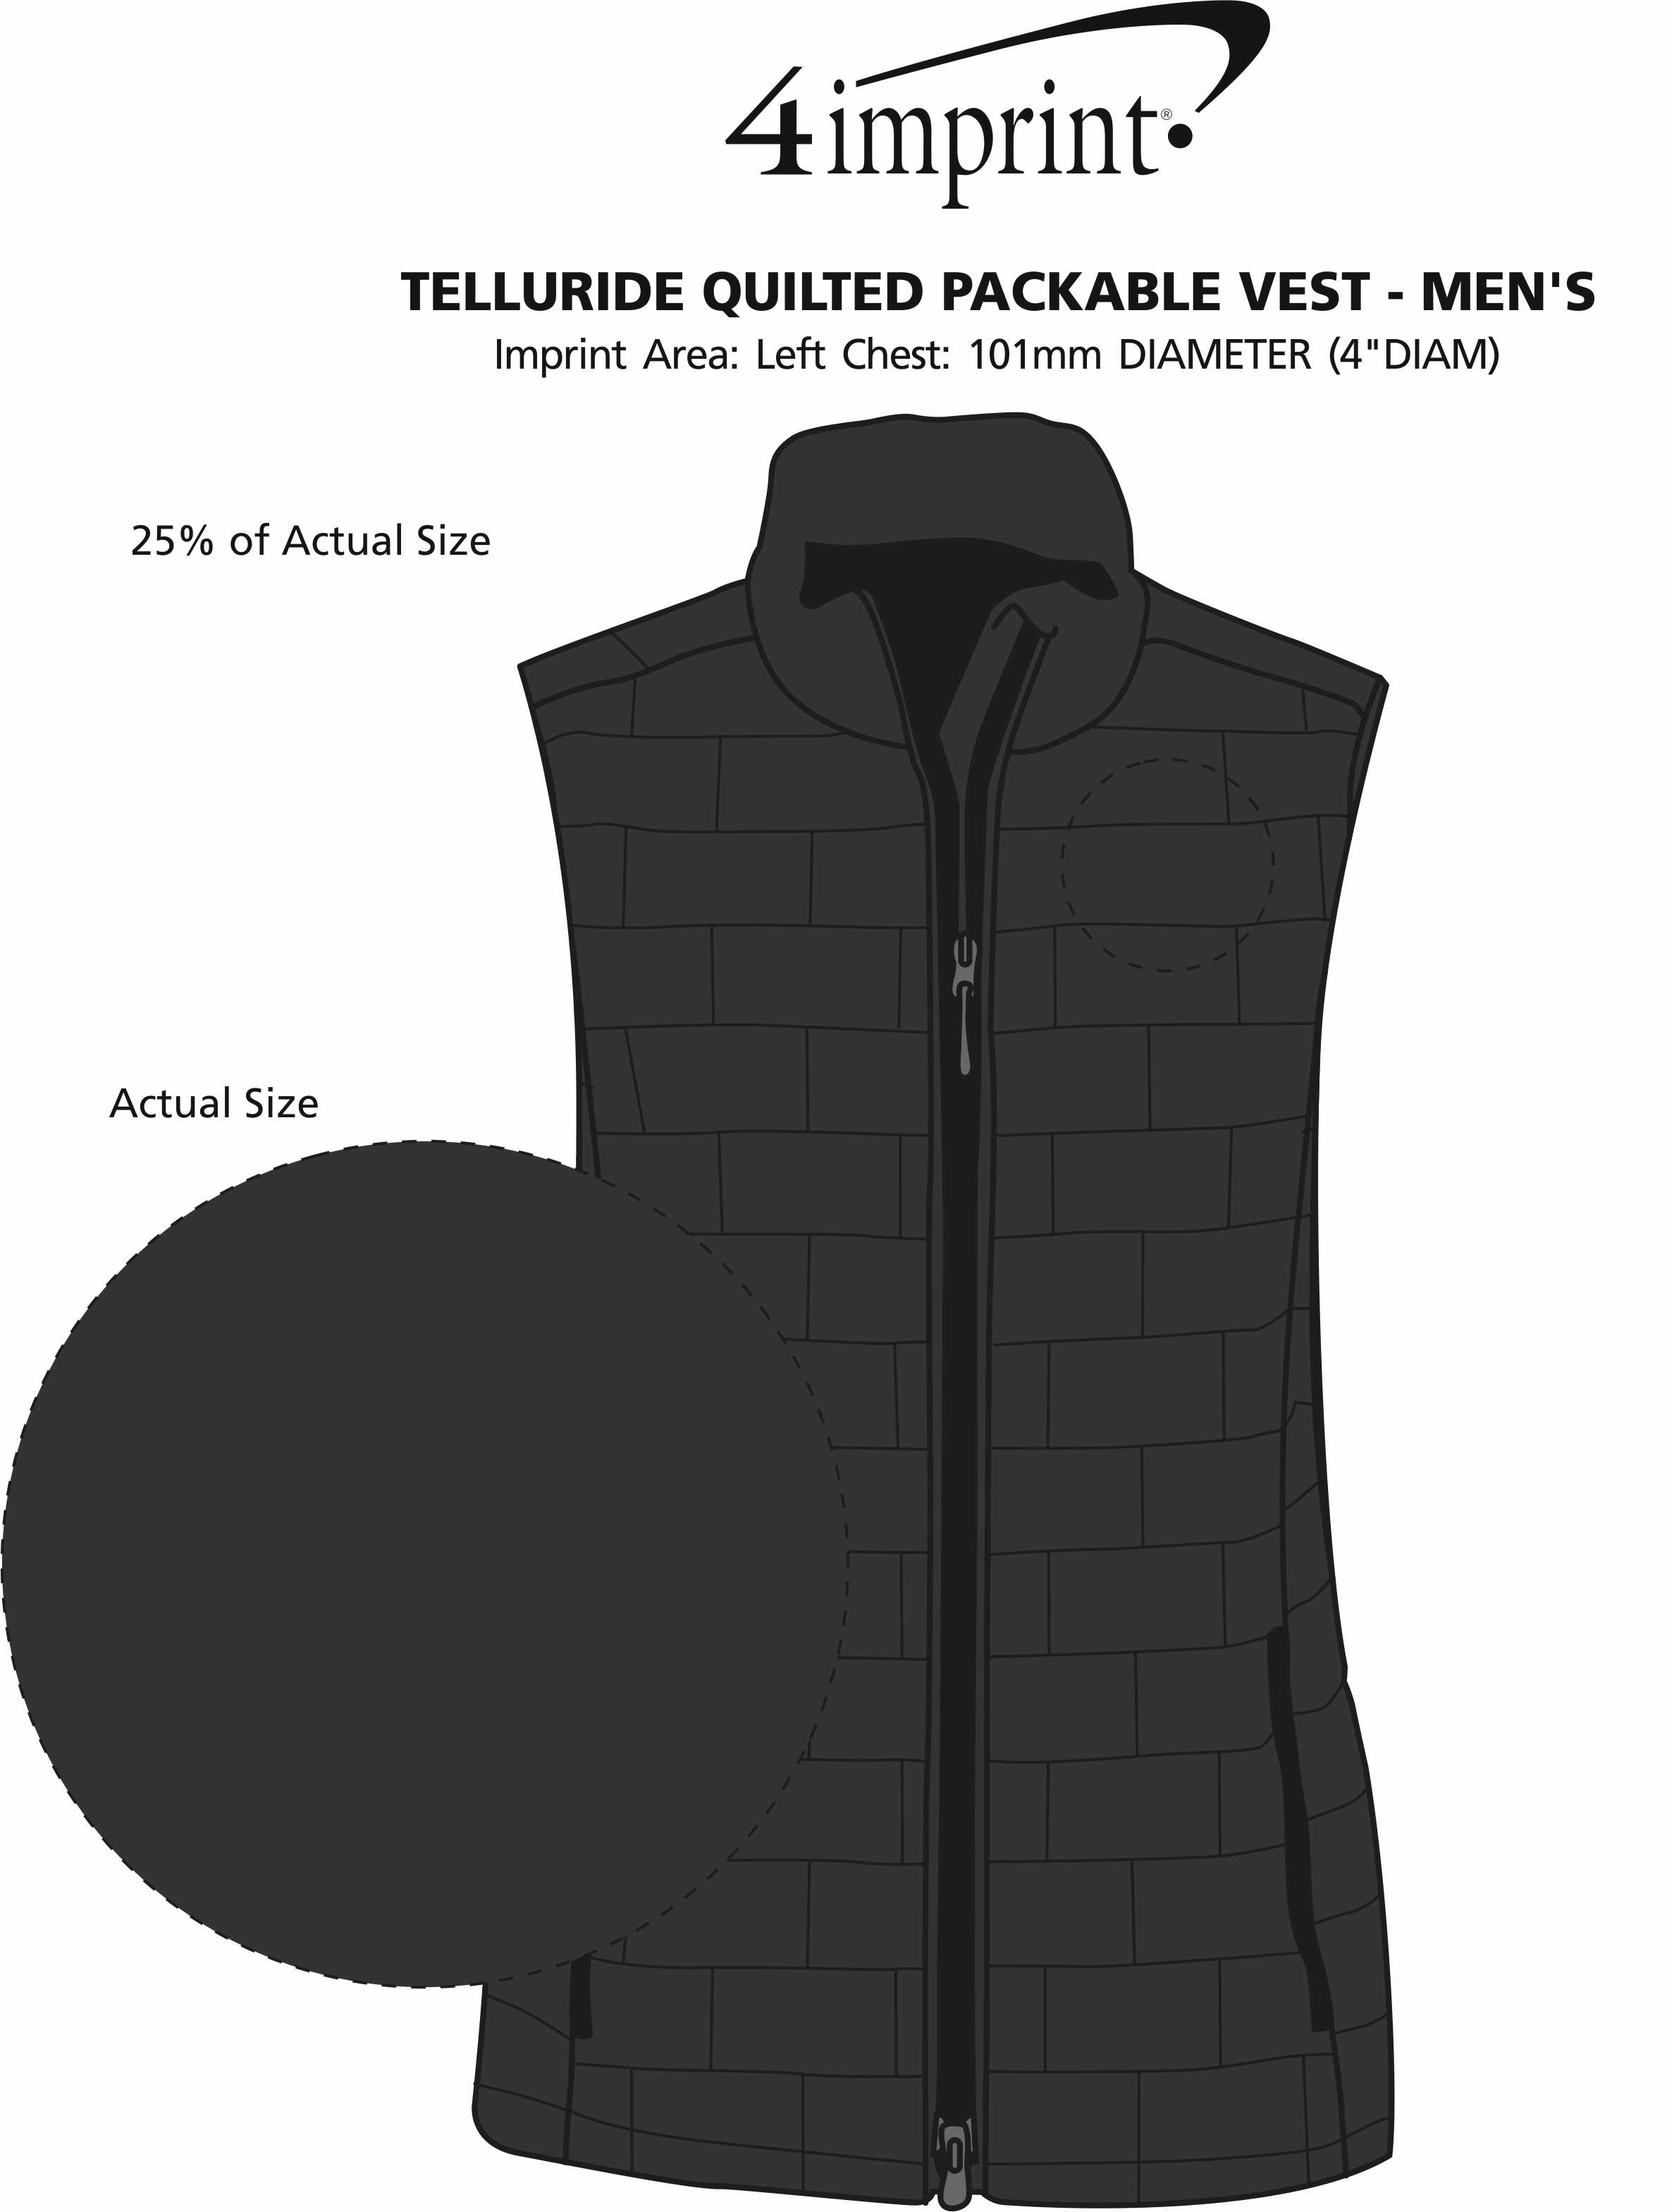 Imprint Area of Telluride Quilted Packable Vest - Men's